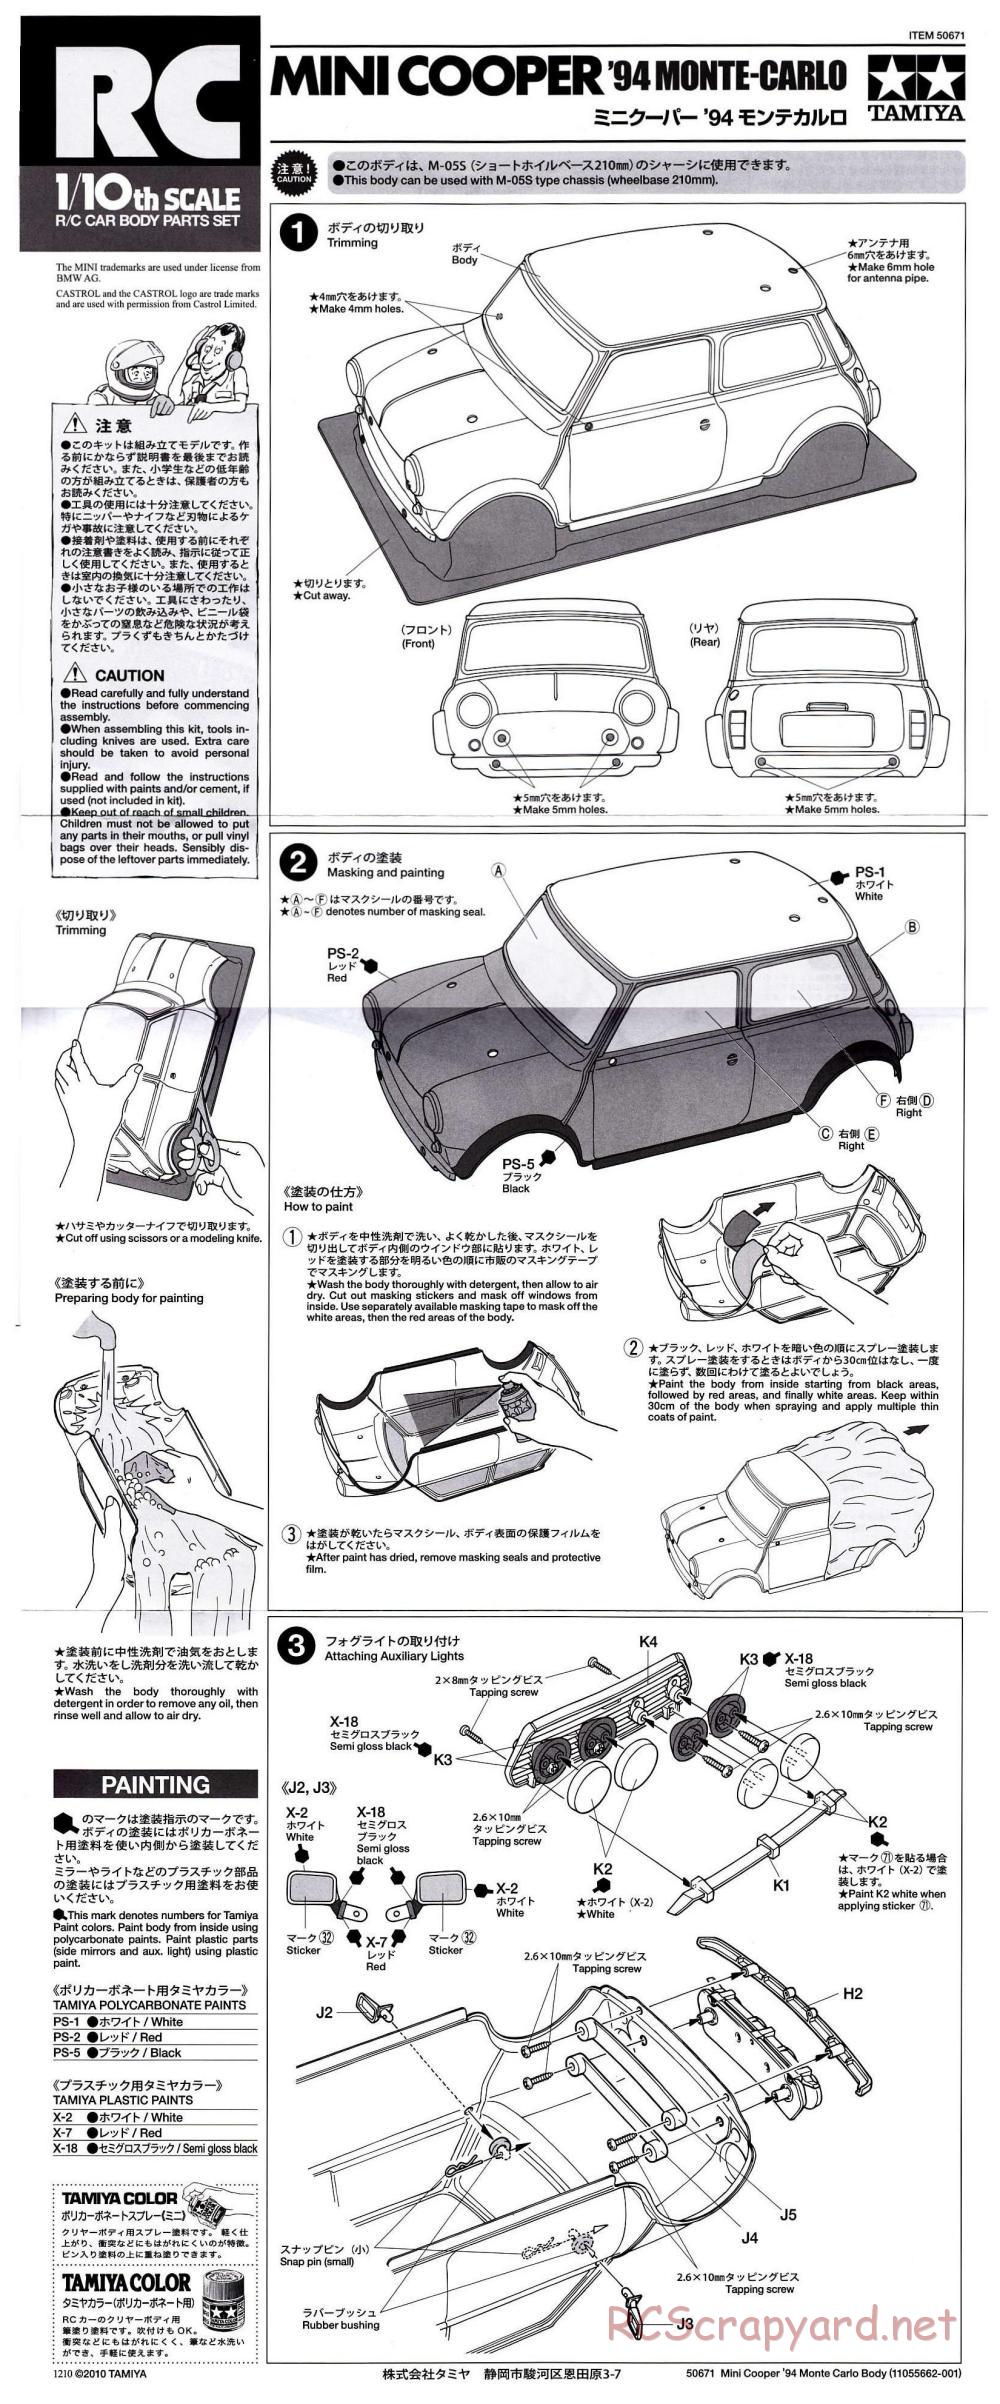 Tamiya - Mini Cooper 94 Monte-Carlo - M-05 Chassis - Body Manual - Page 1